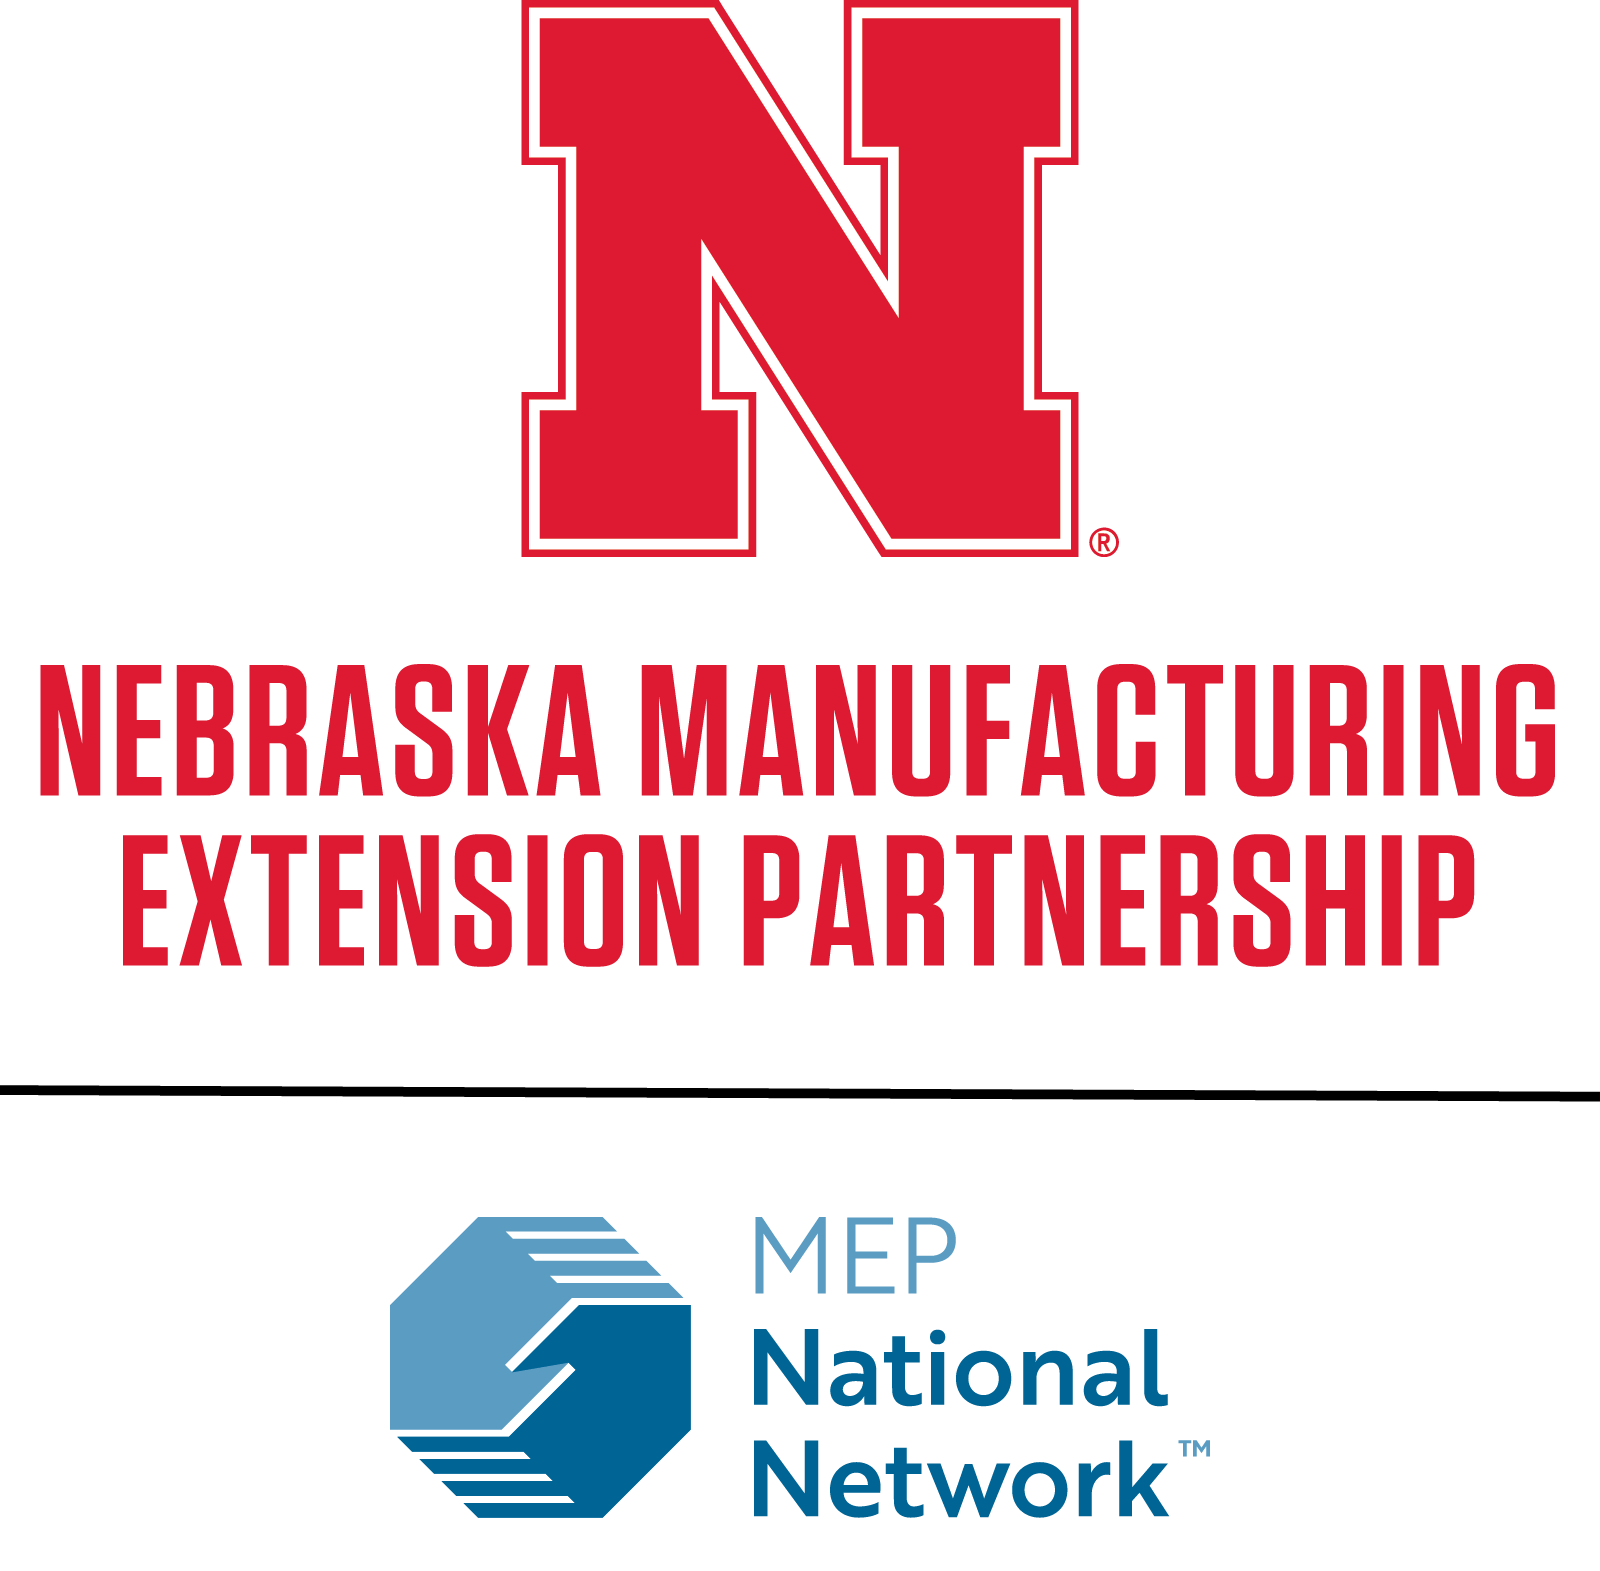 Nebraska Manufacturing Extension Partnership